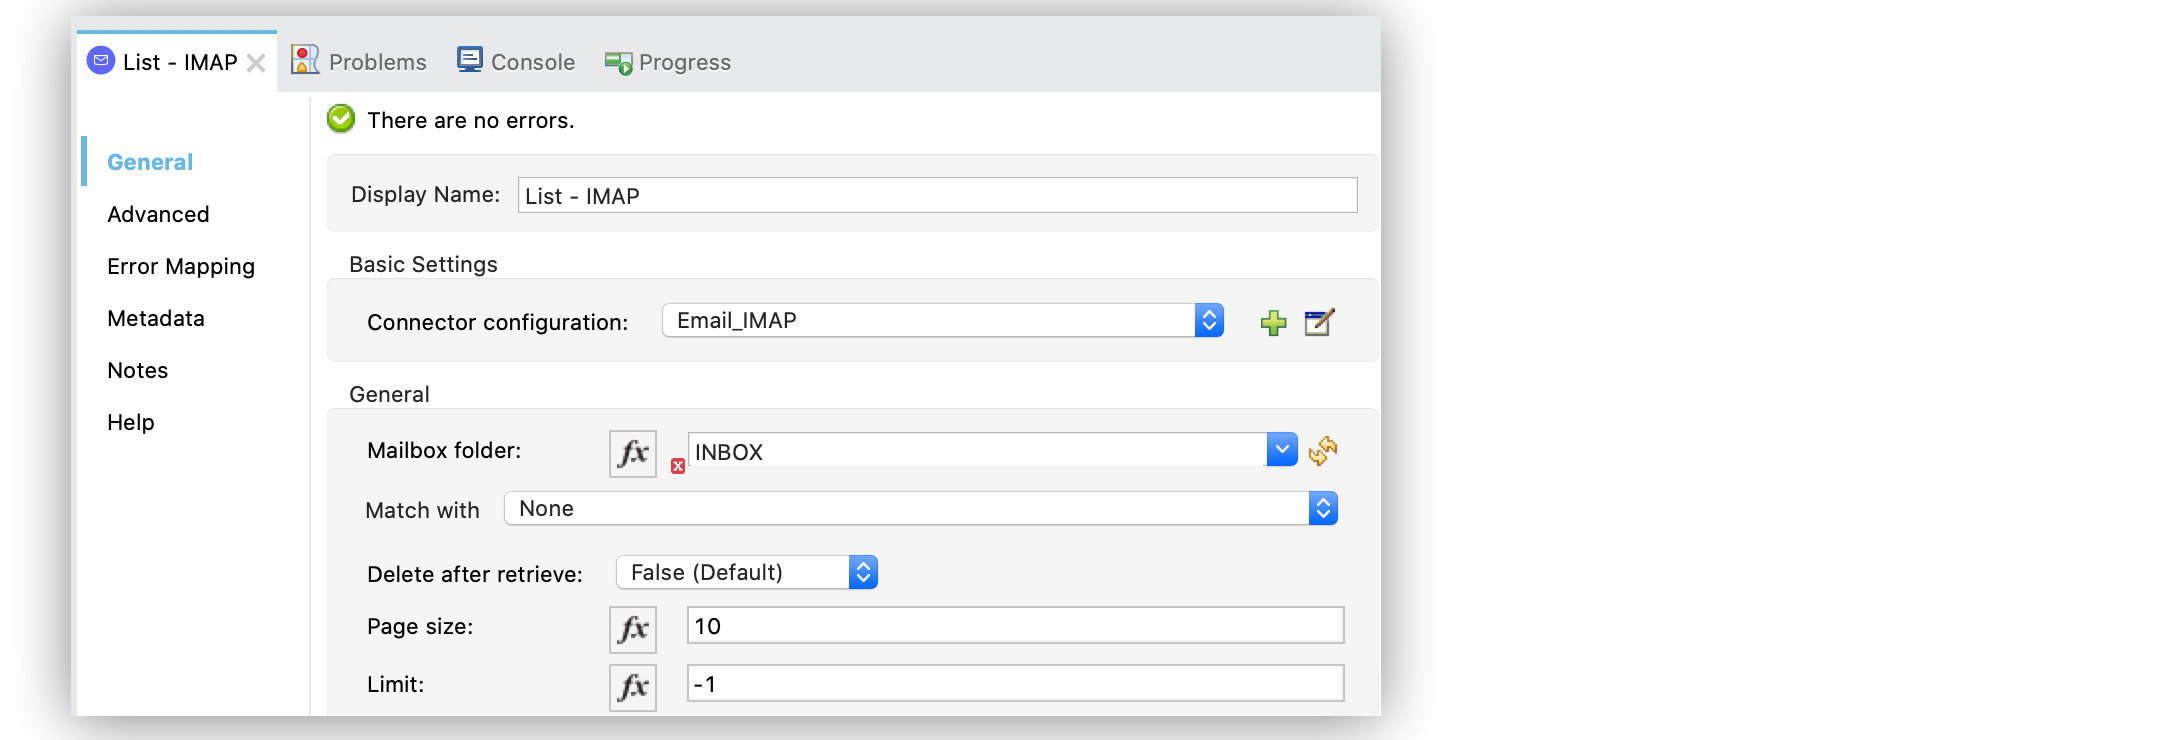 List - IMAP Configuration